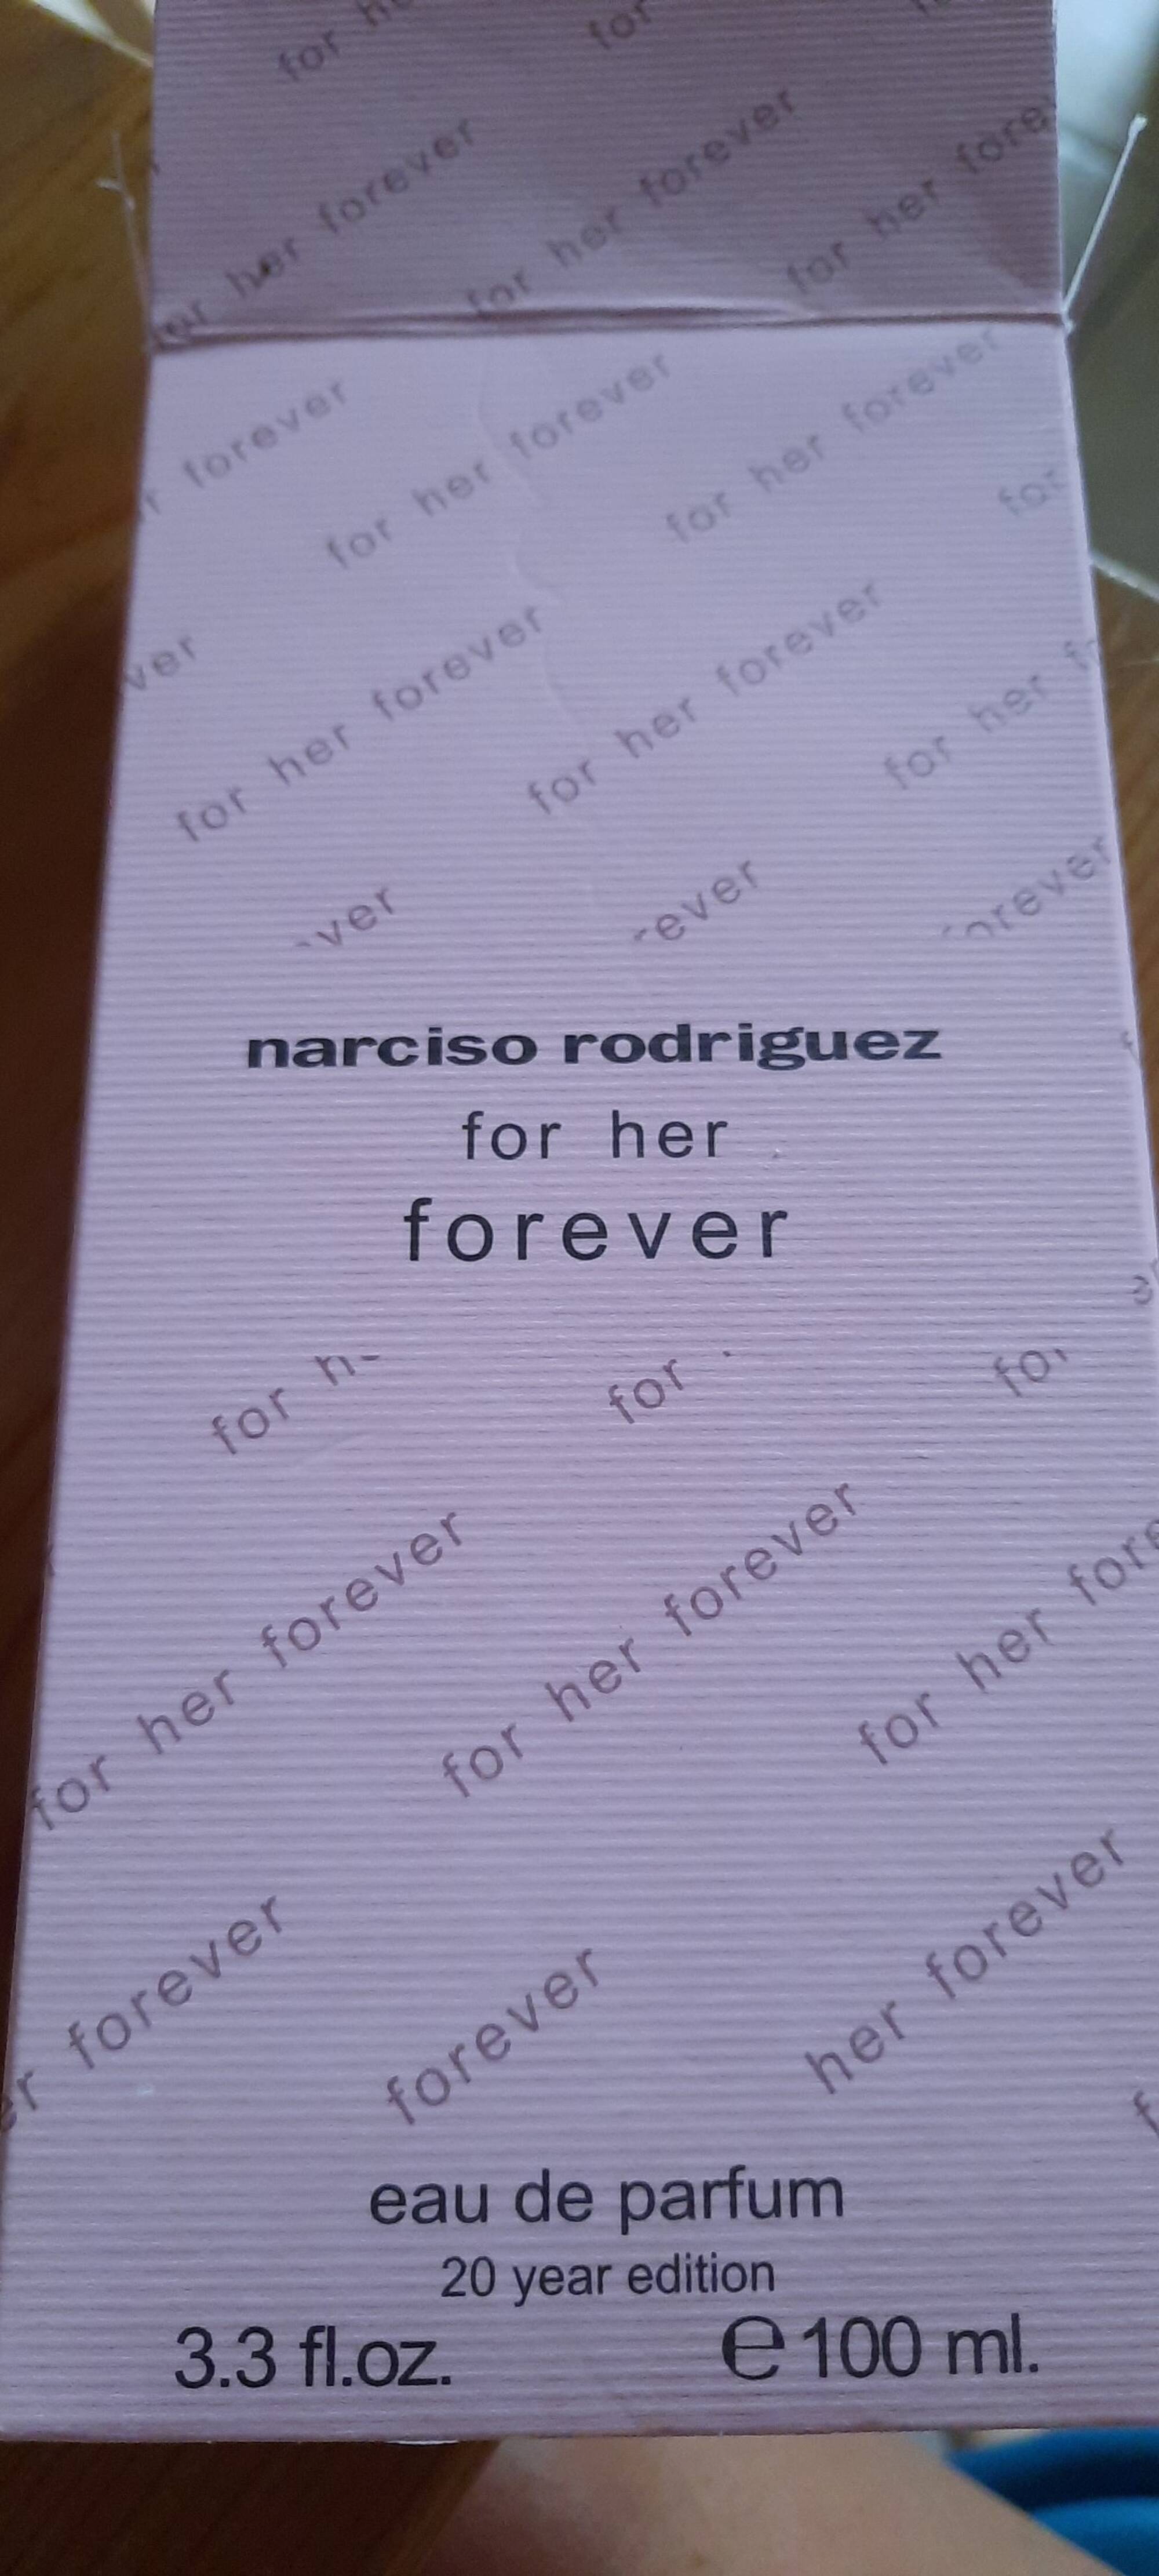 NARCISO RODRIGUEZ - For her forever - Eau de parfum